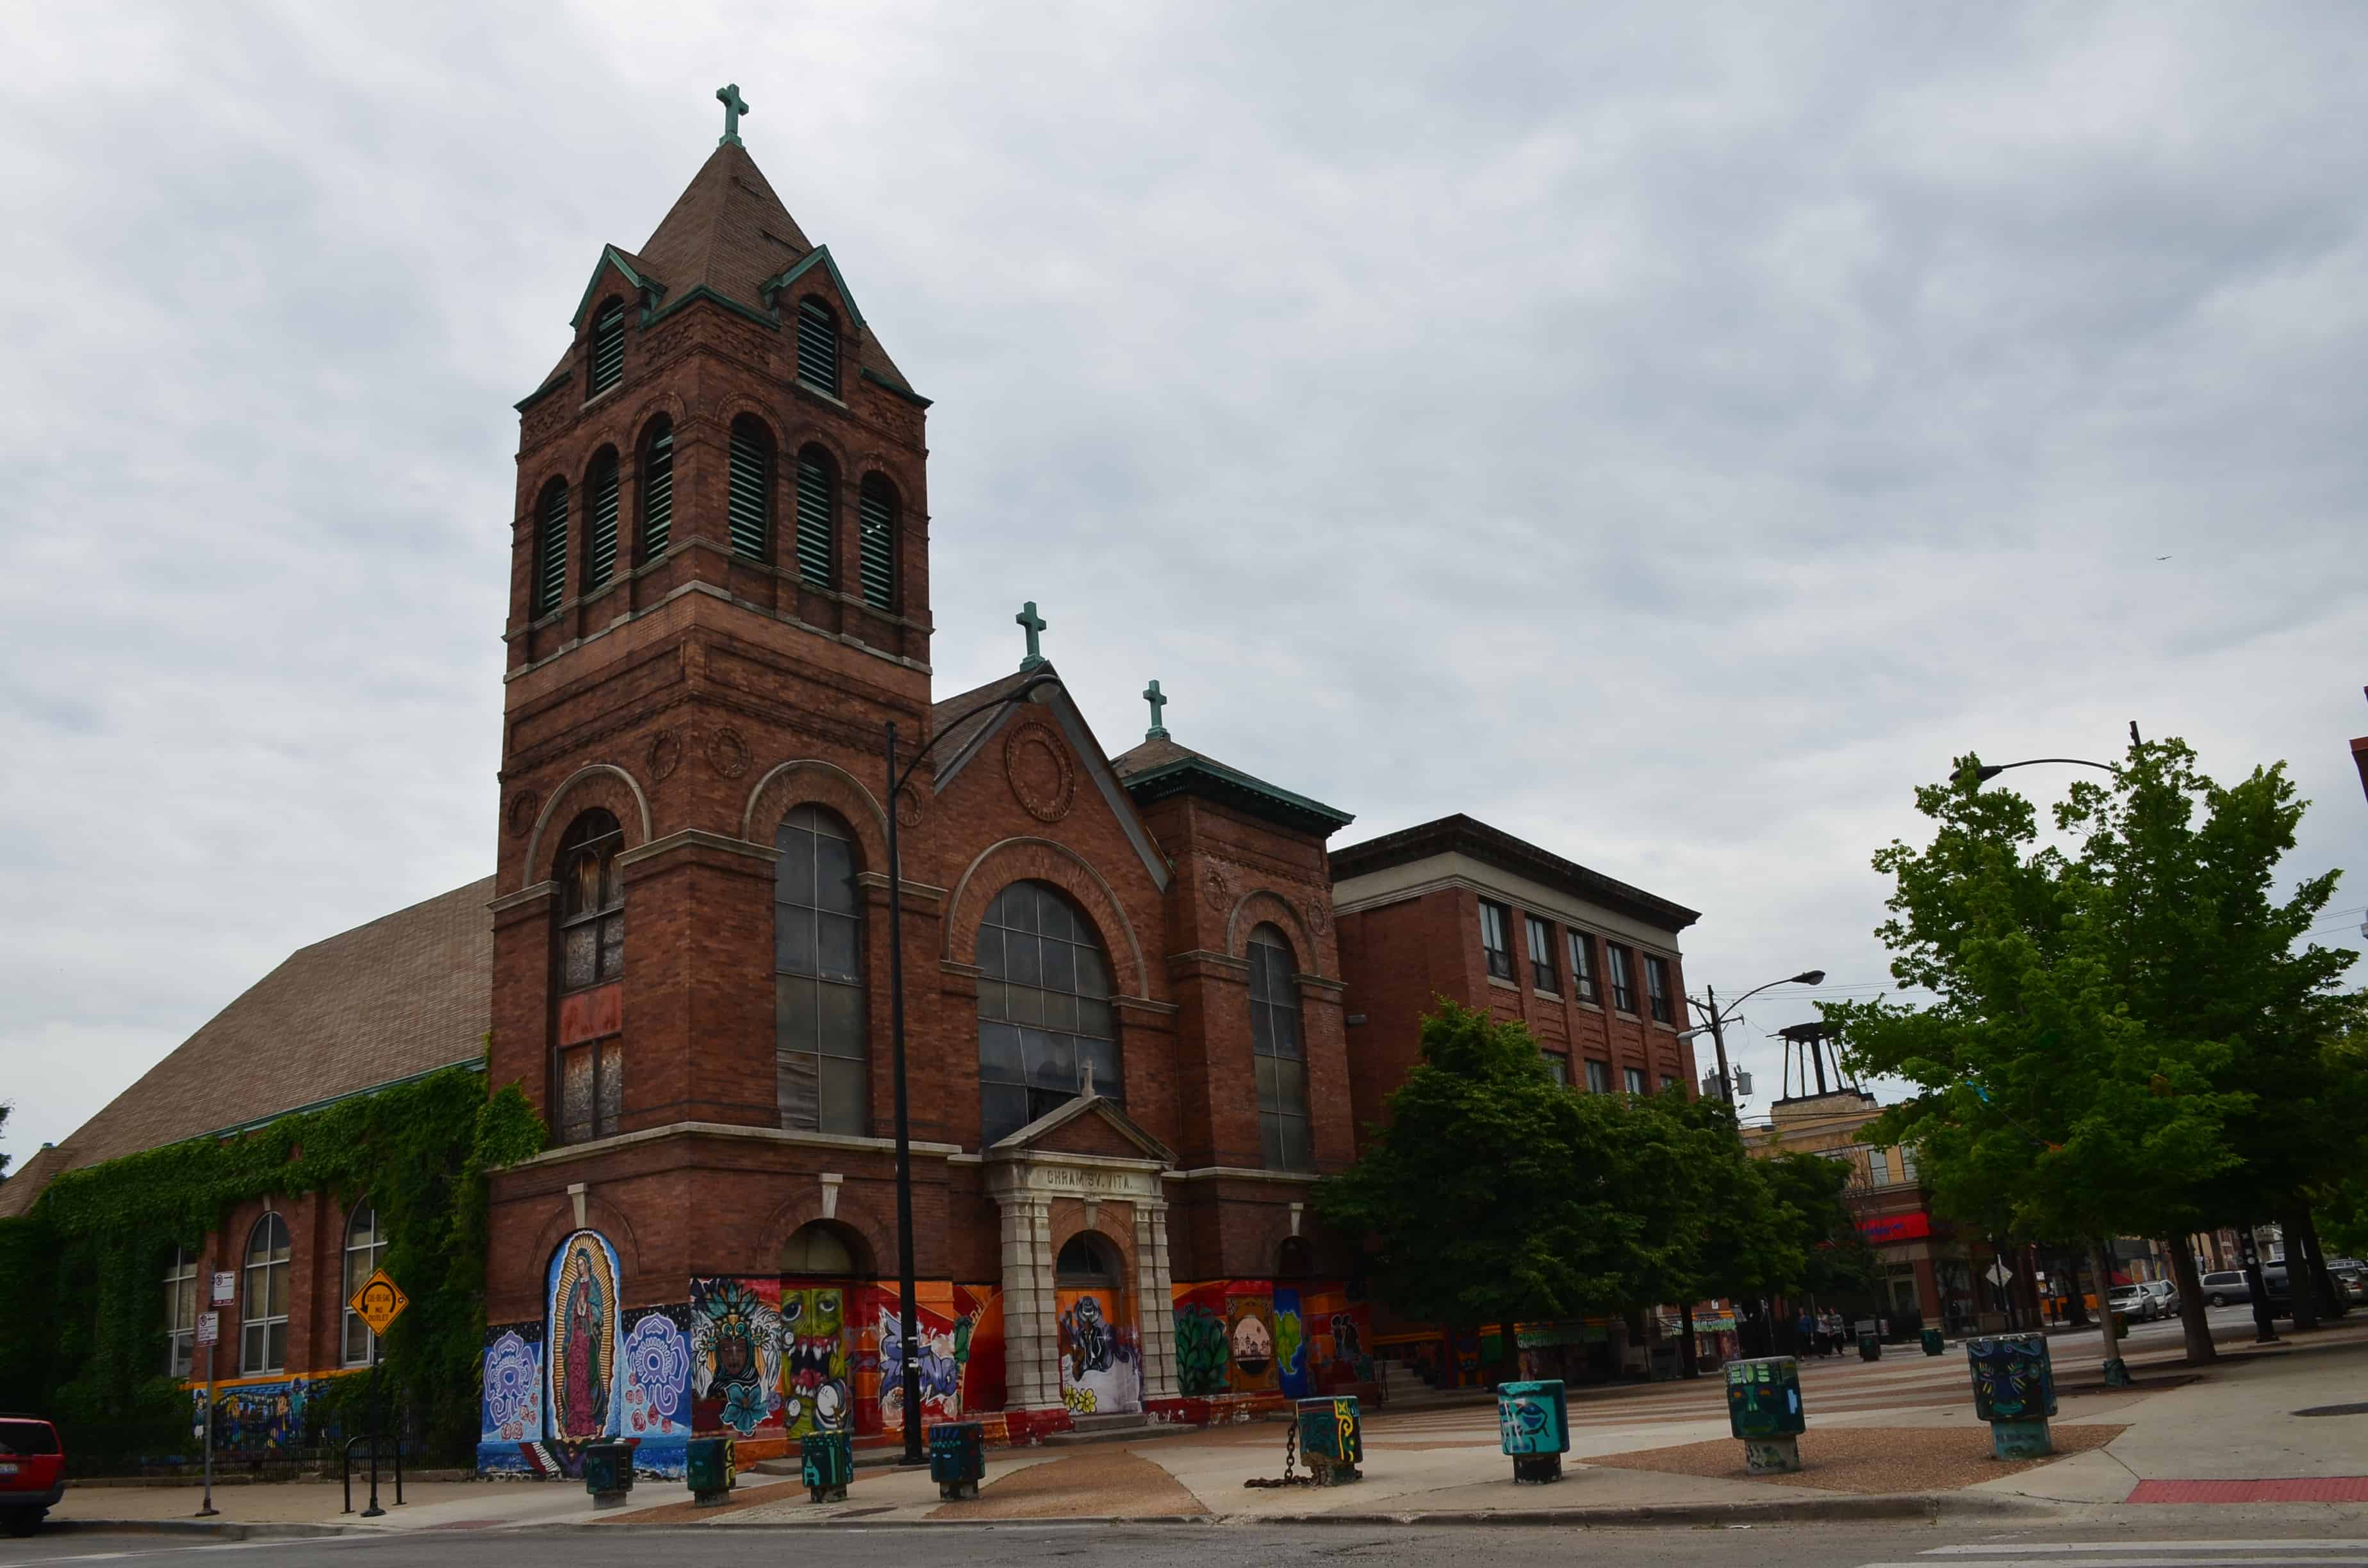 The former Saint Vitus Catholic Church in Pilsen, Chicago, Illinois